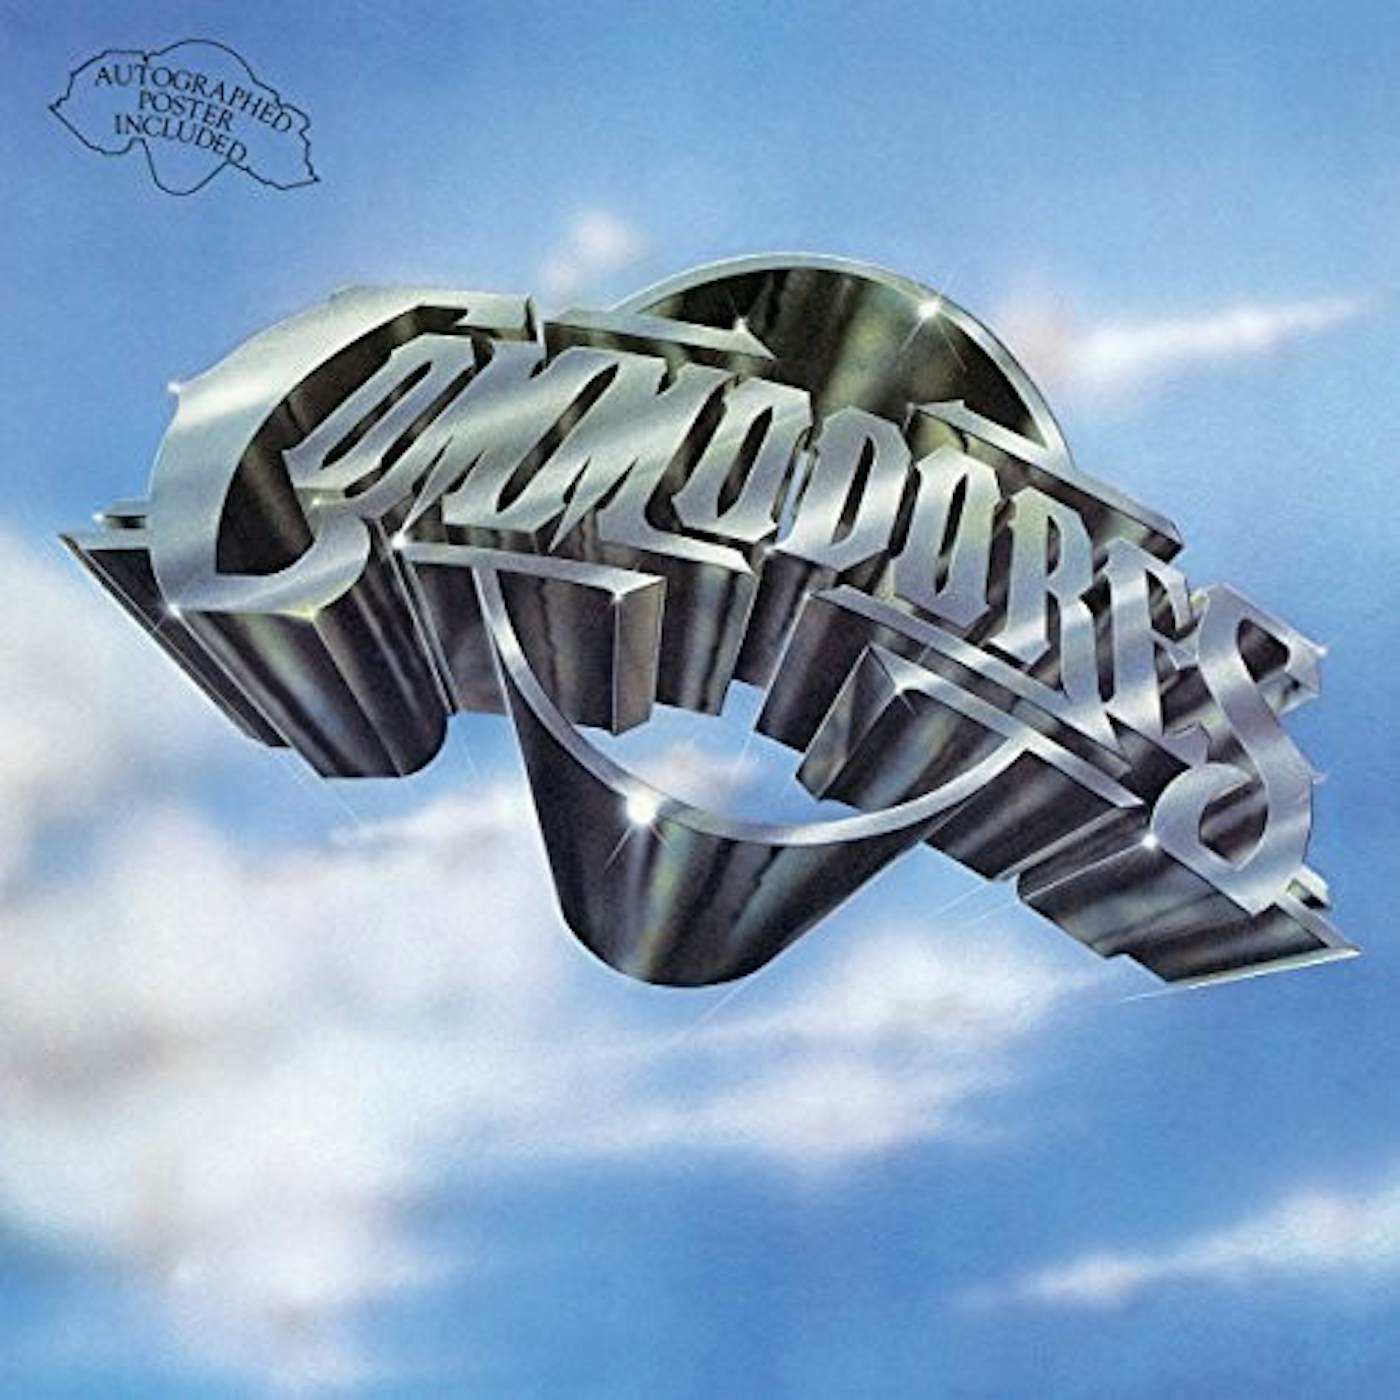 Commodores Vinyl Record